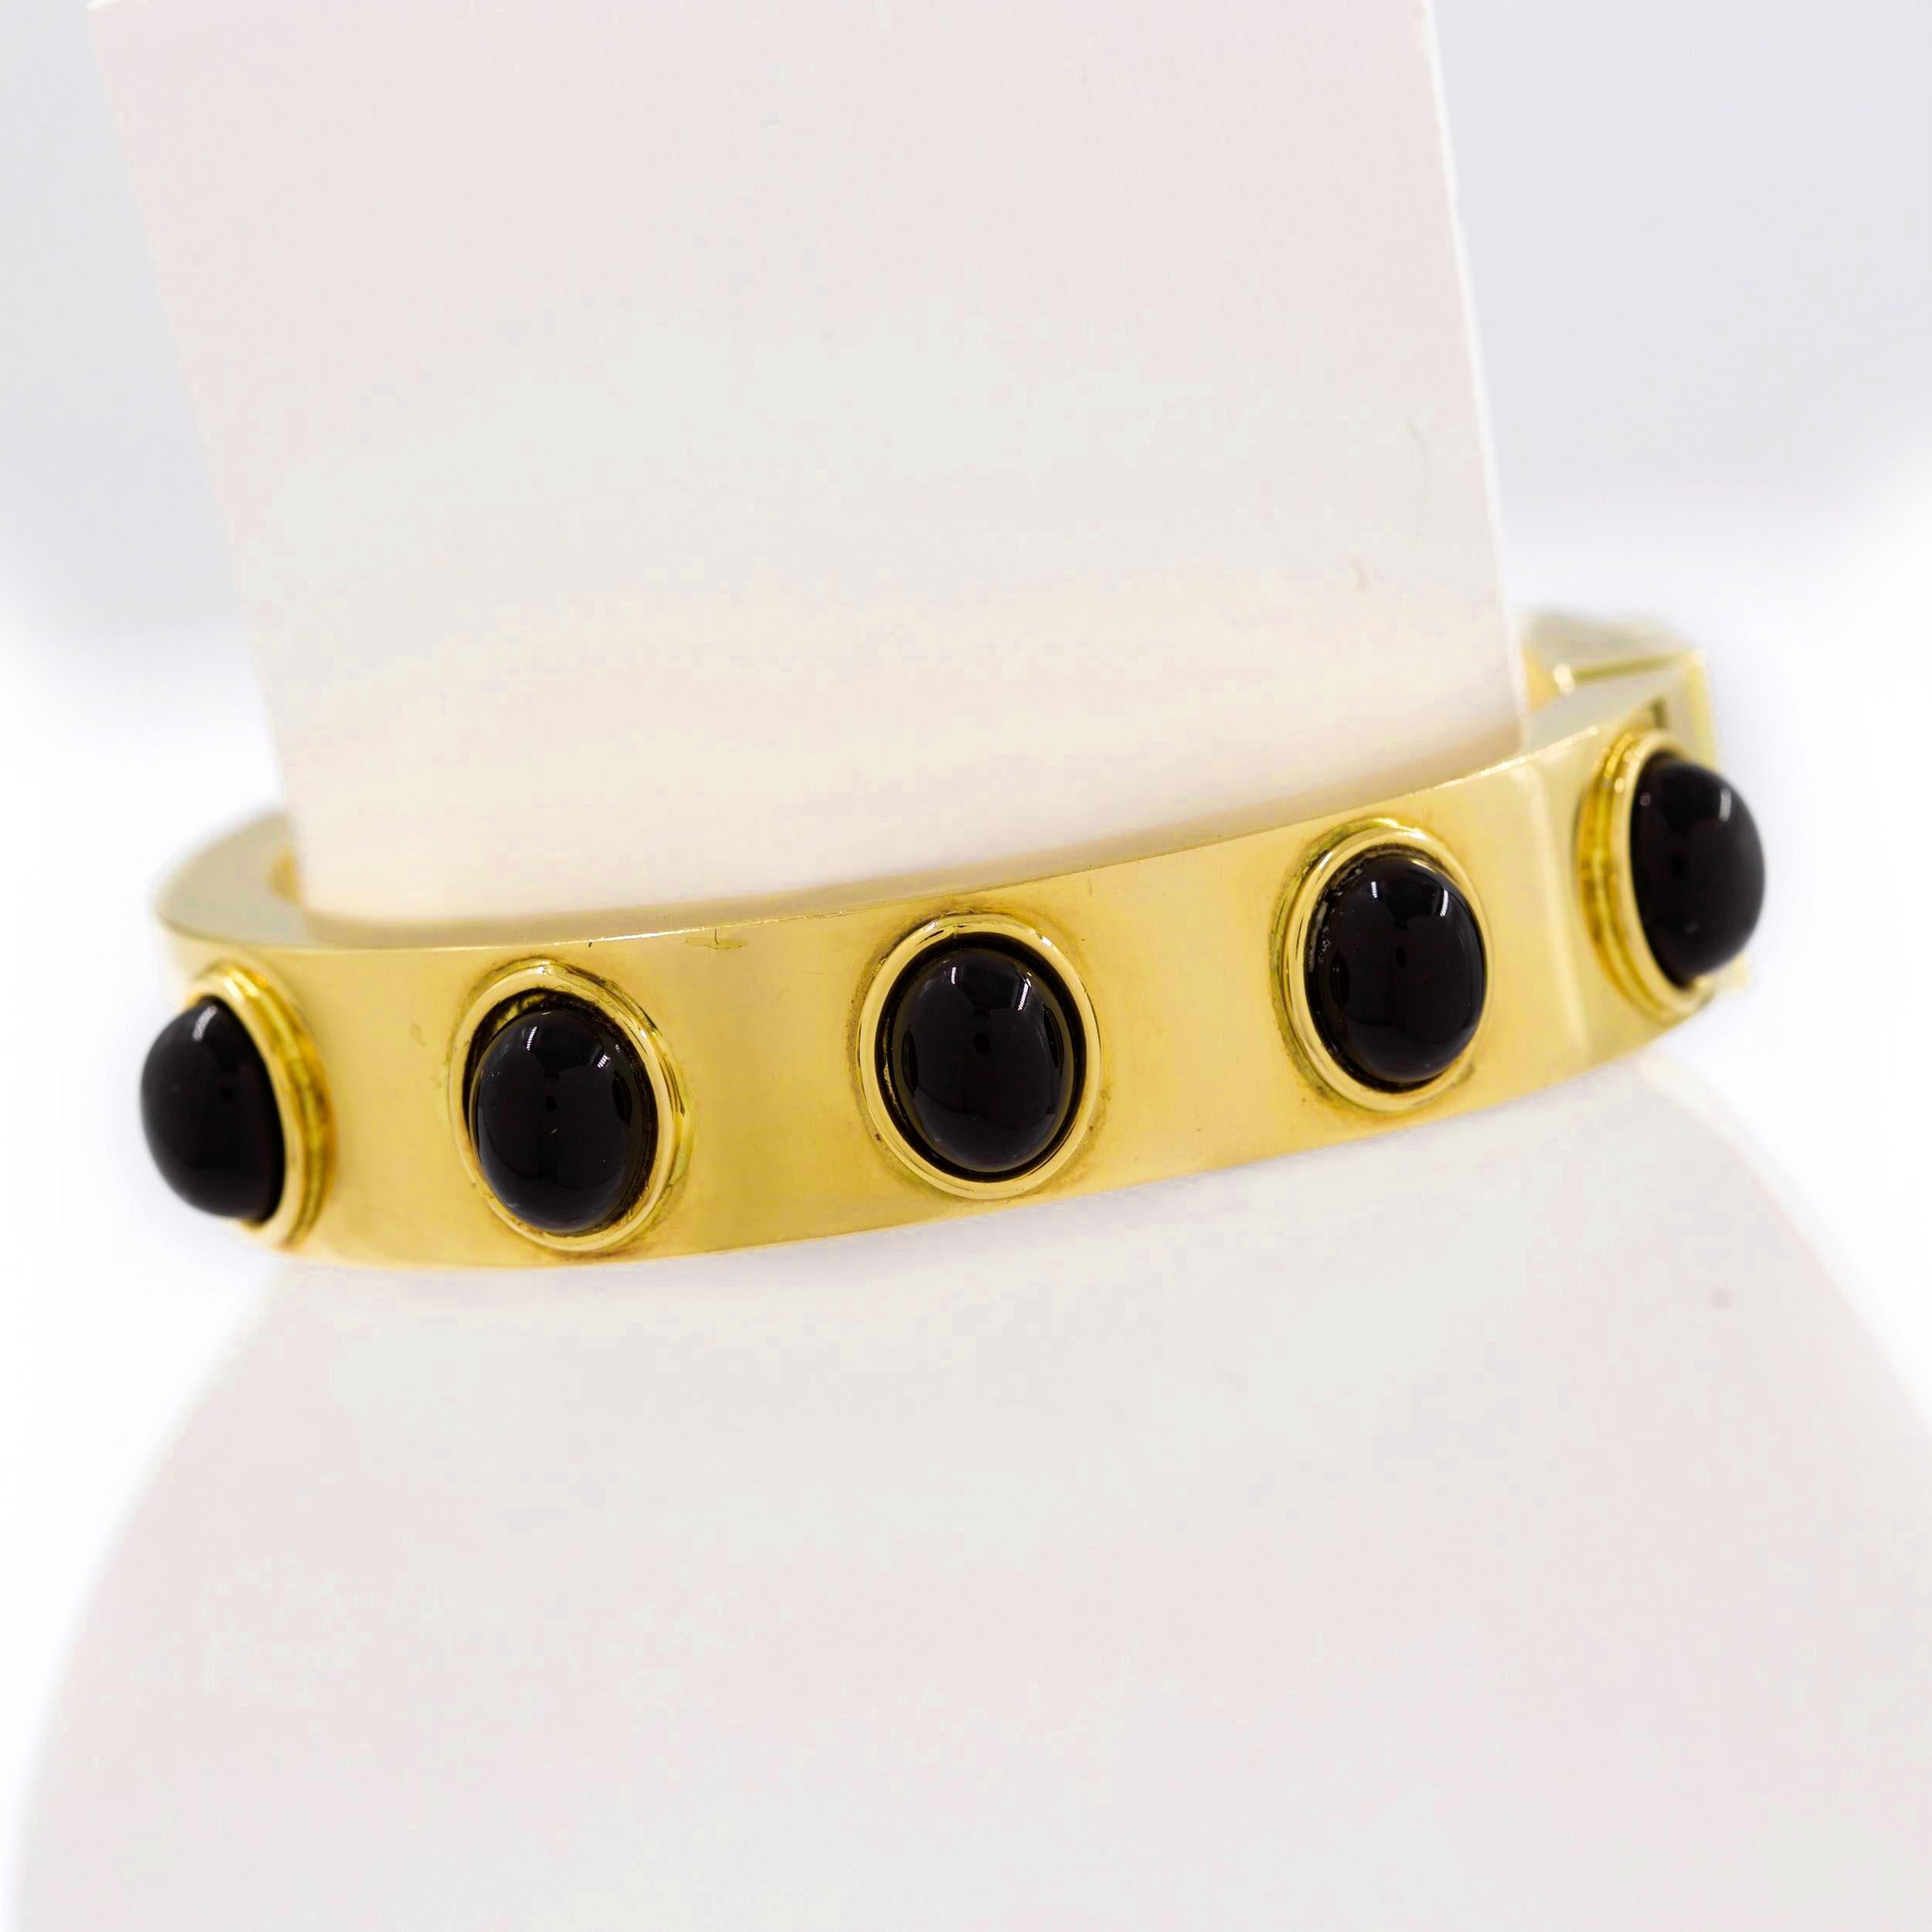 Mid-Century Modern Retro Modern 18-Karat Gold Bangle Cuff Bracelet with Black Cabochon, 66 Grams